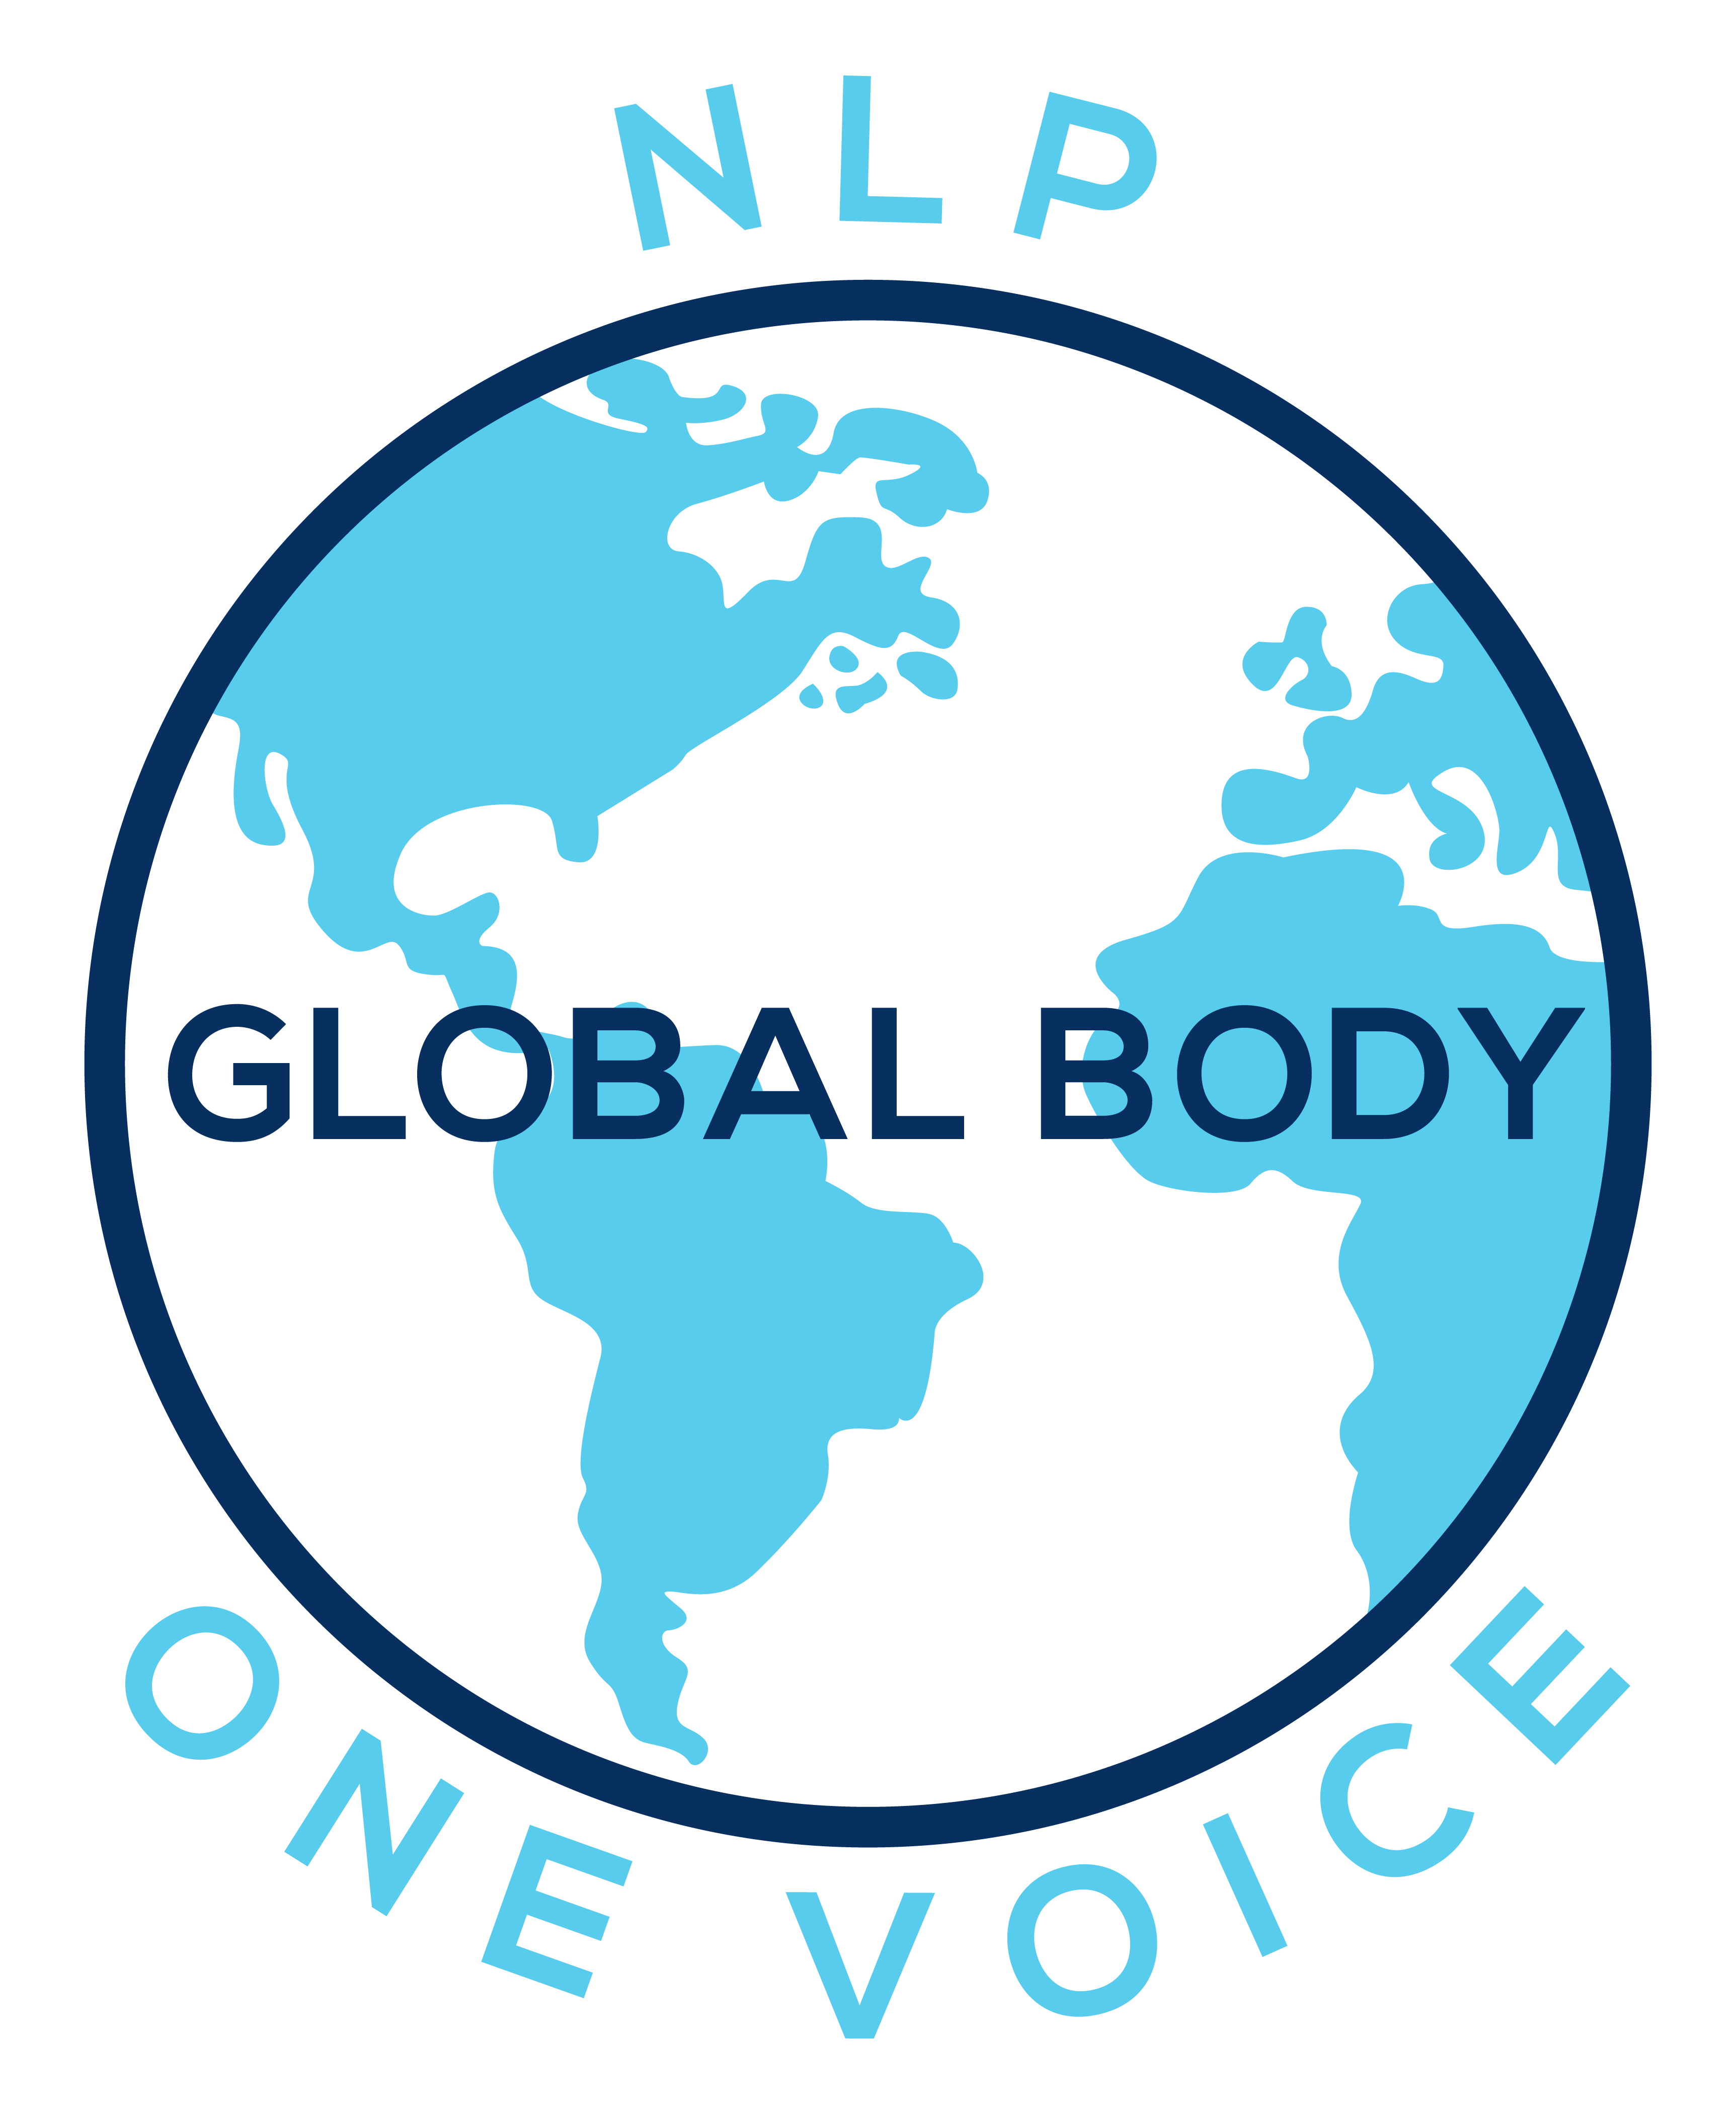 NLP Global Body